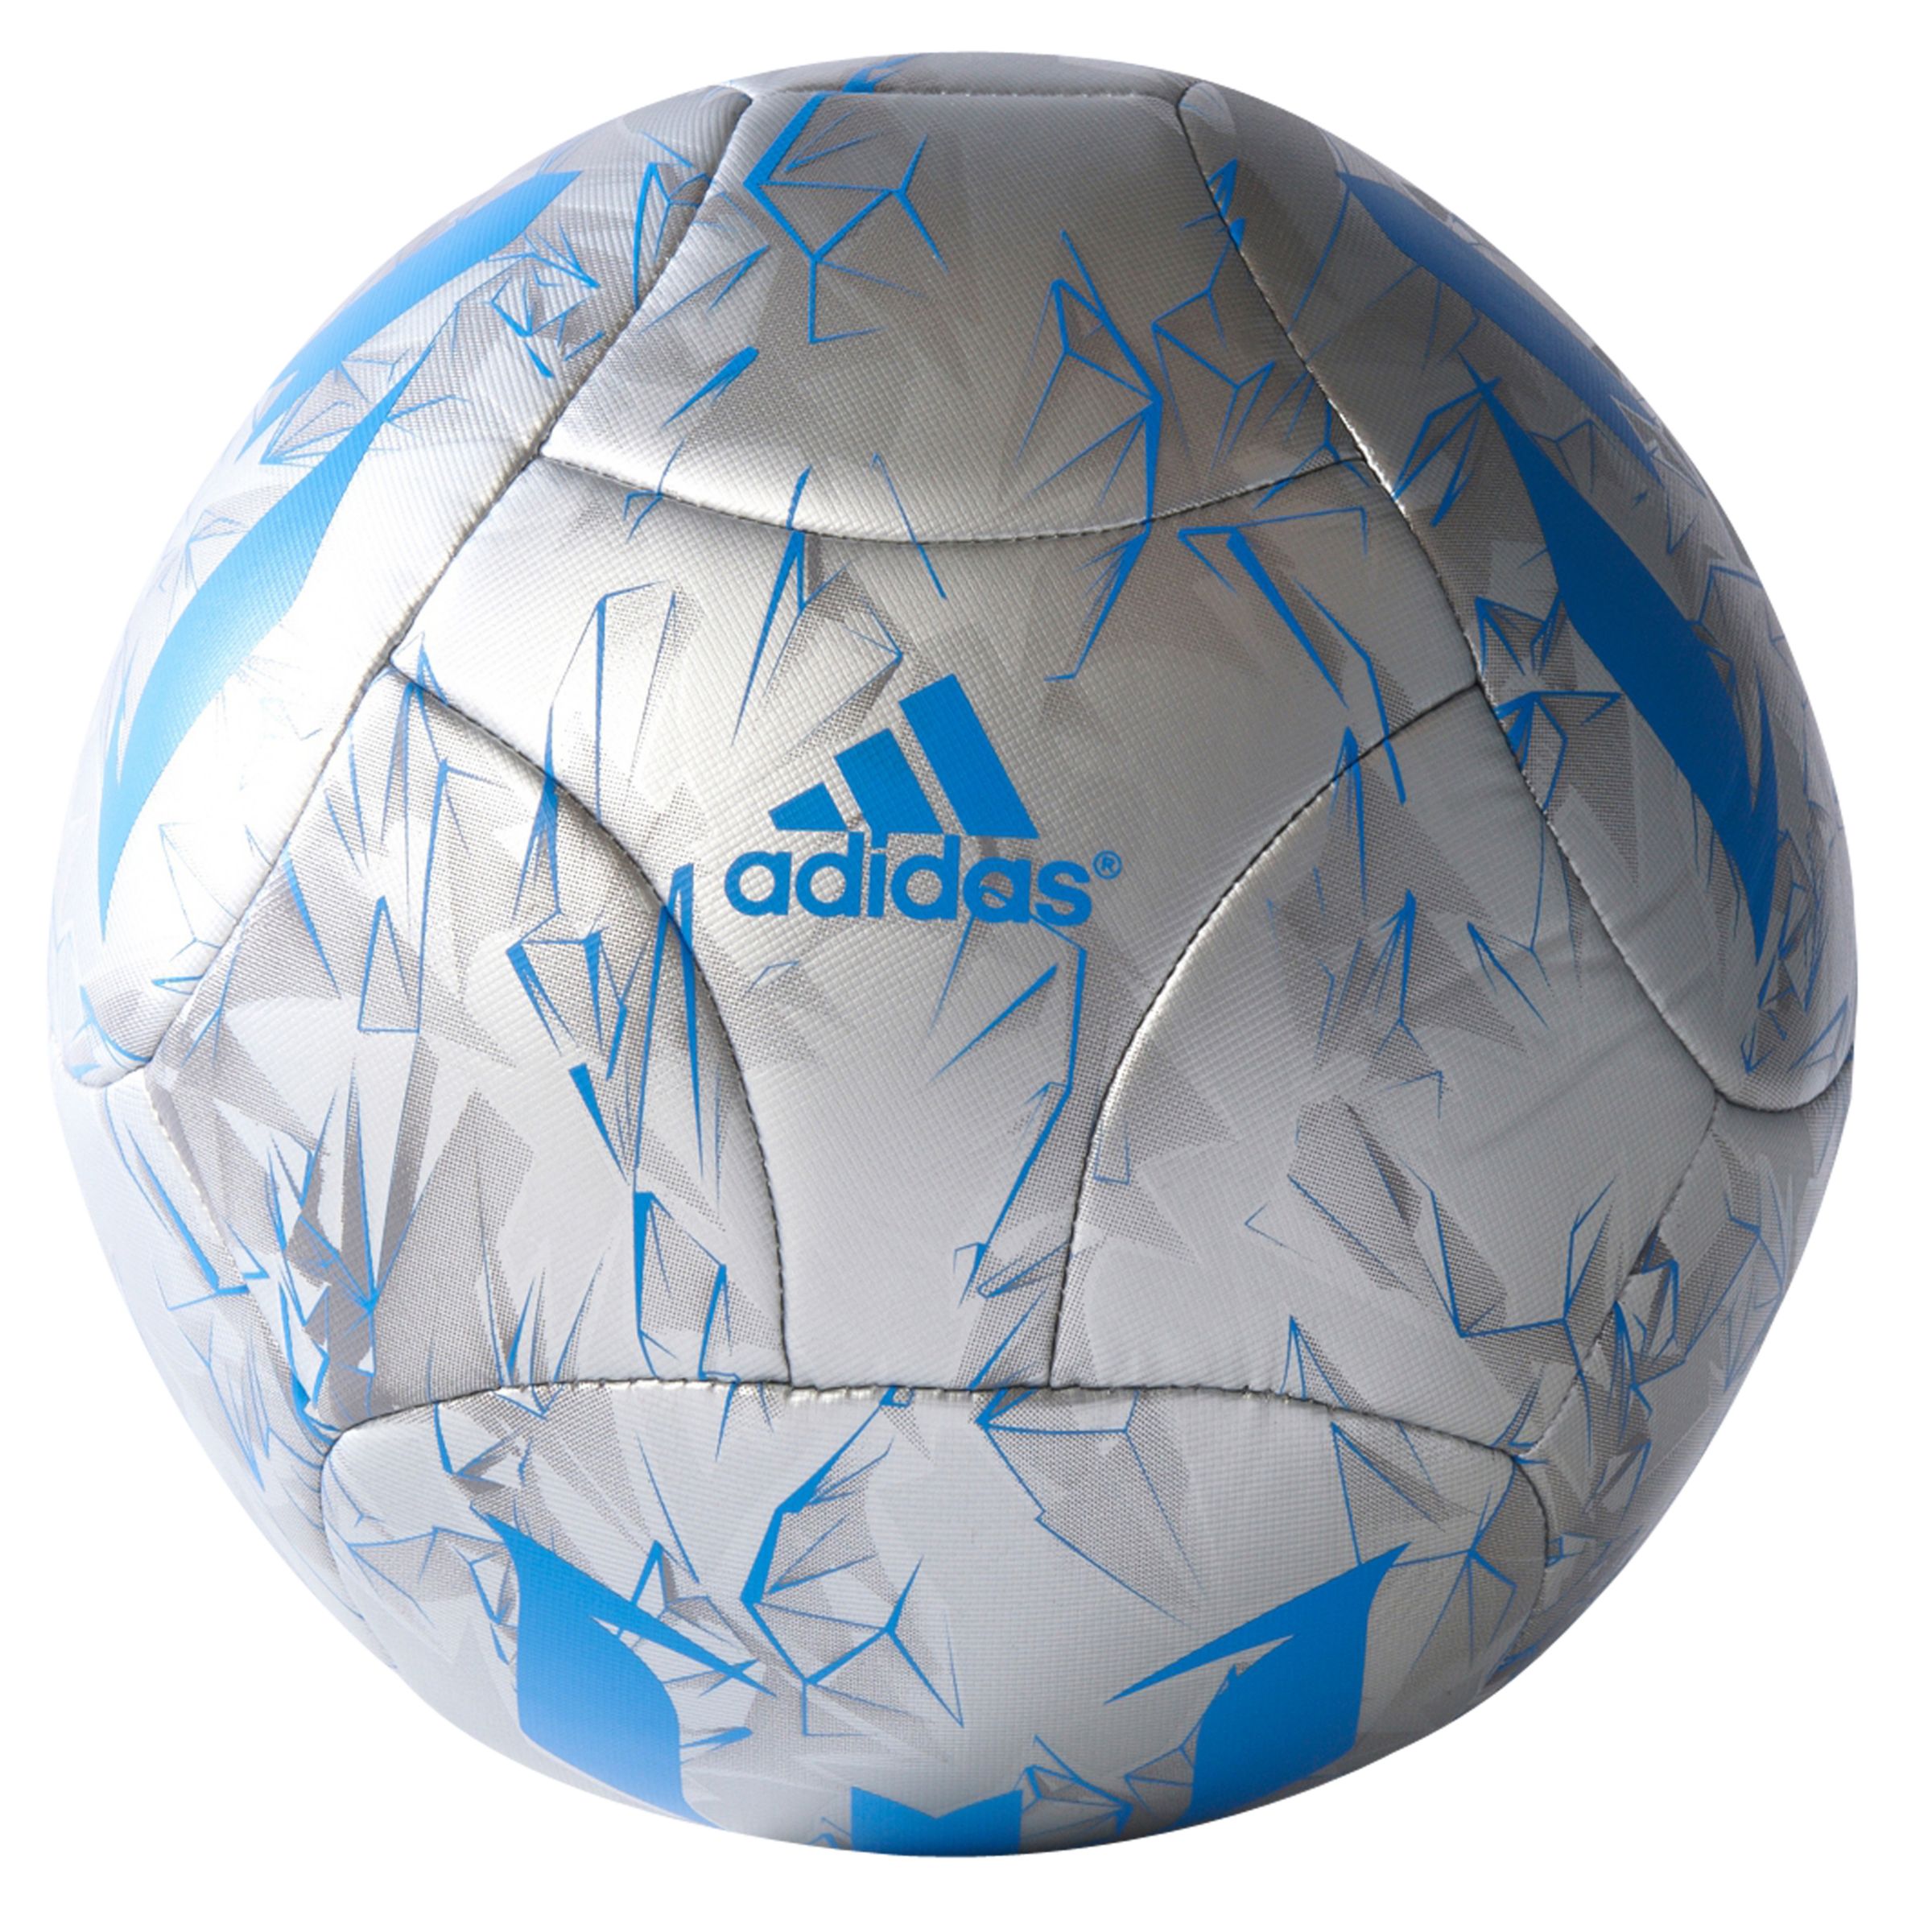 Adidas Messi Q3 Football, Size 5, Silver/Blue at John Lewis \u0026 Partners